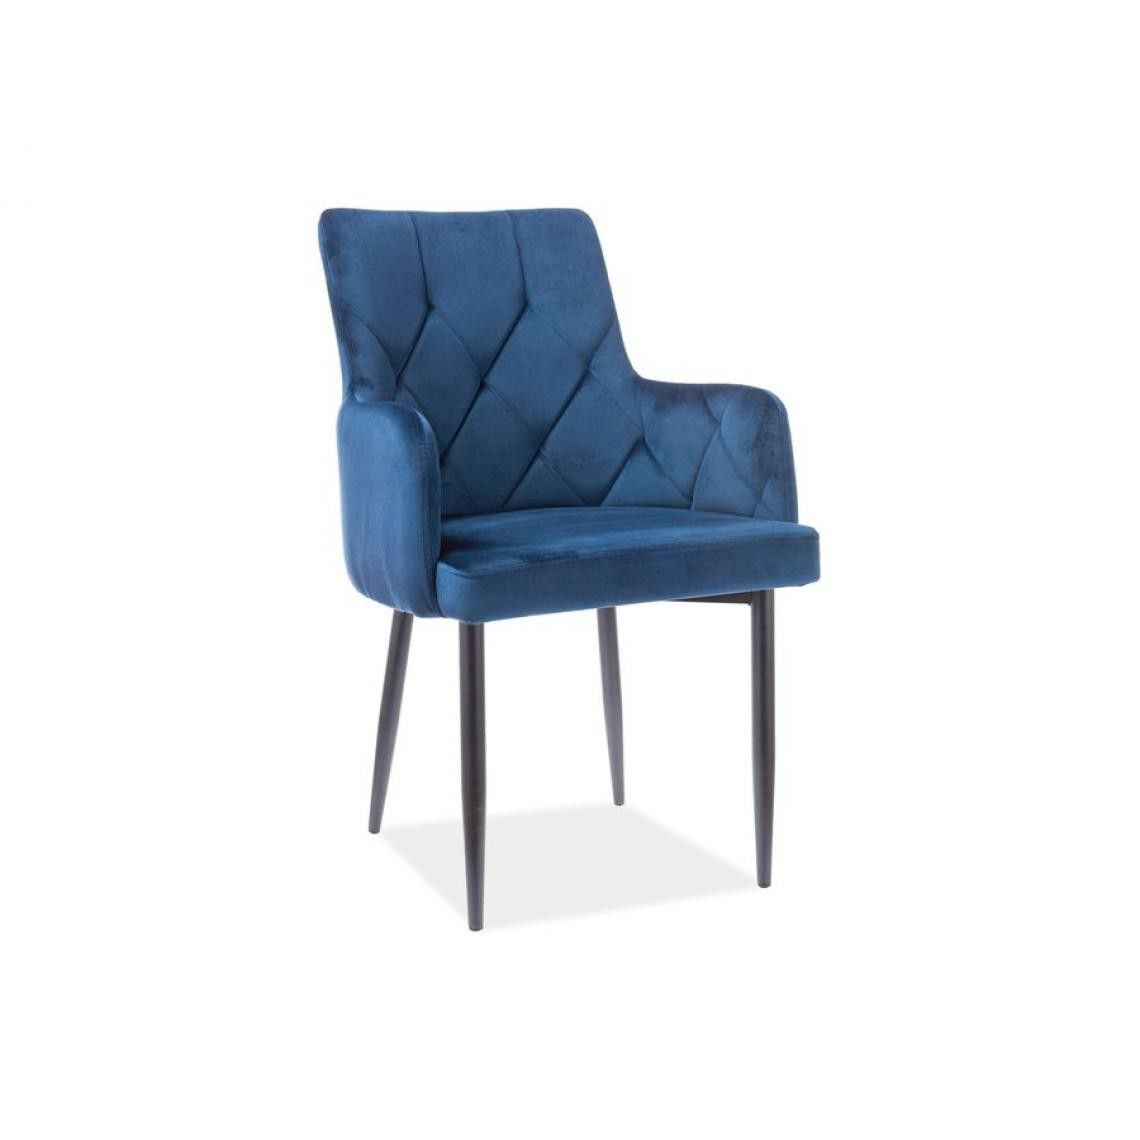 Hucoco - RICAROF - Chaise style glamour salon/salle à manger - 88x57x45 cm - Bleu - Chaises